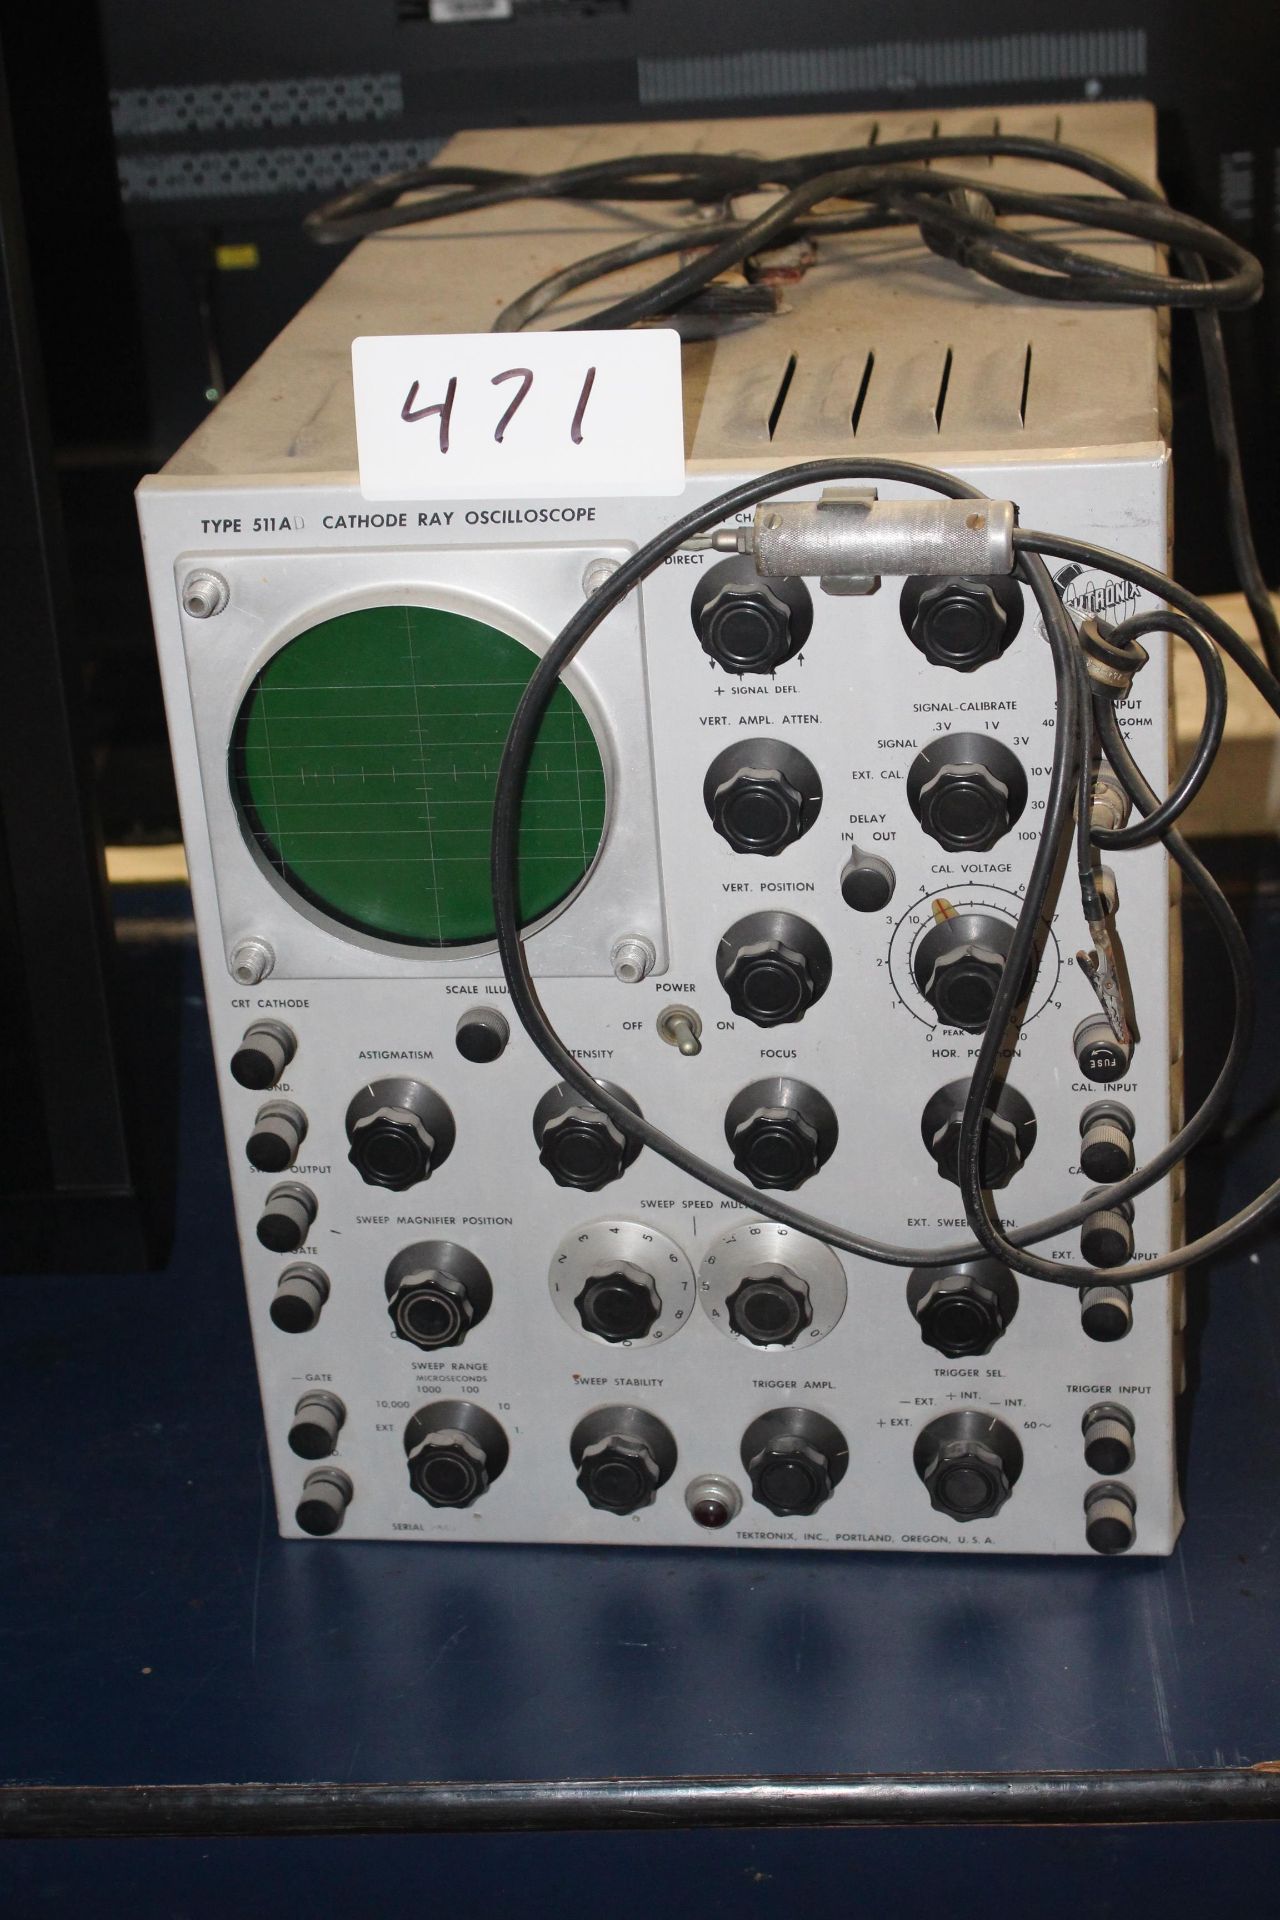 Type 511A cathode ray oscilloscope